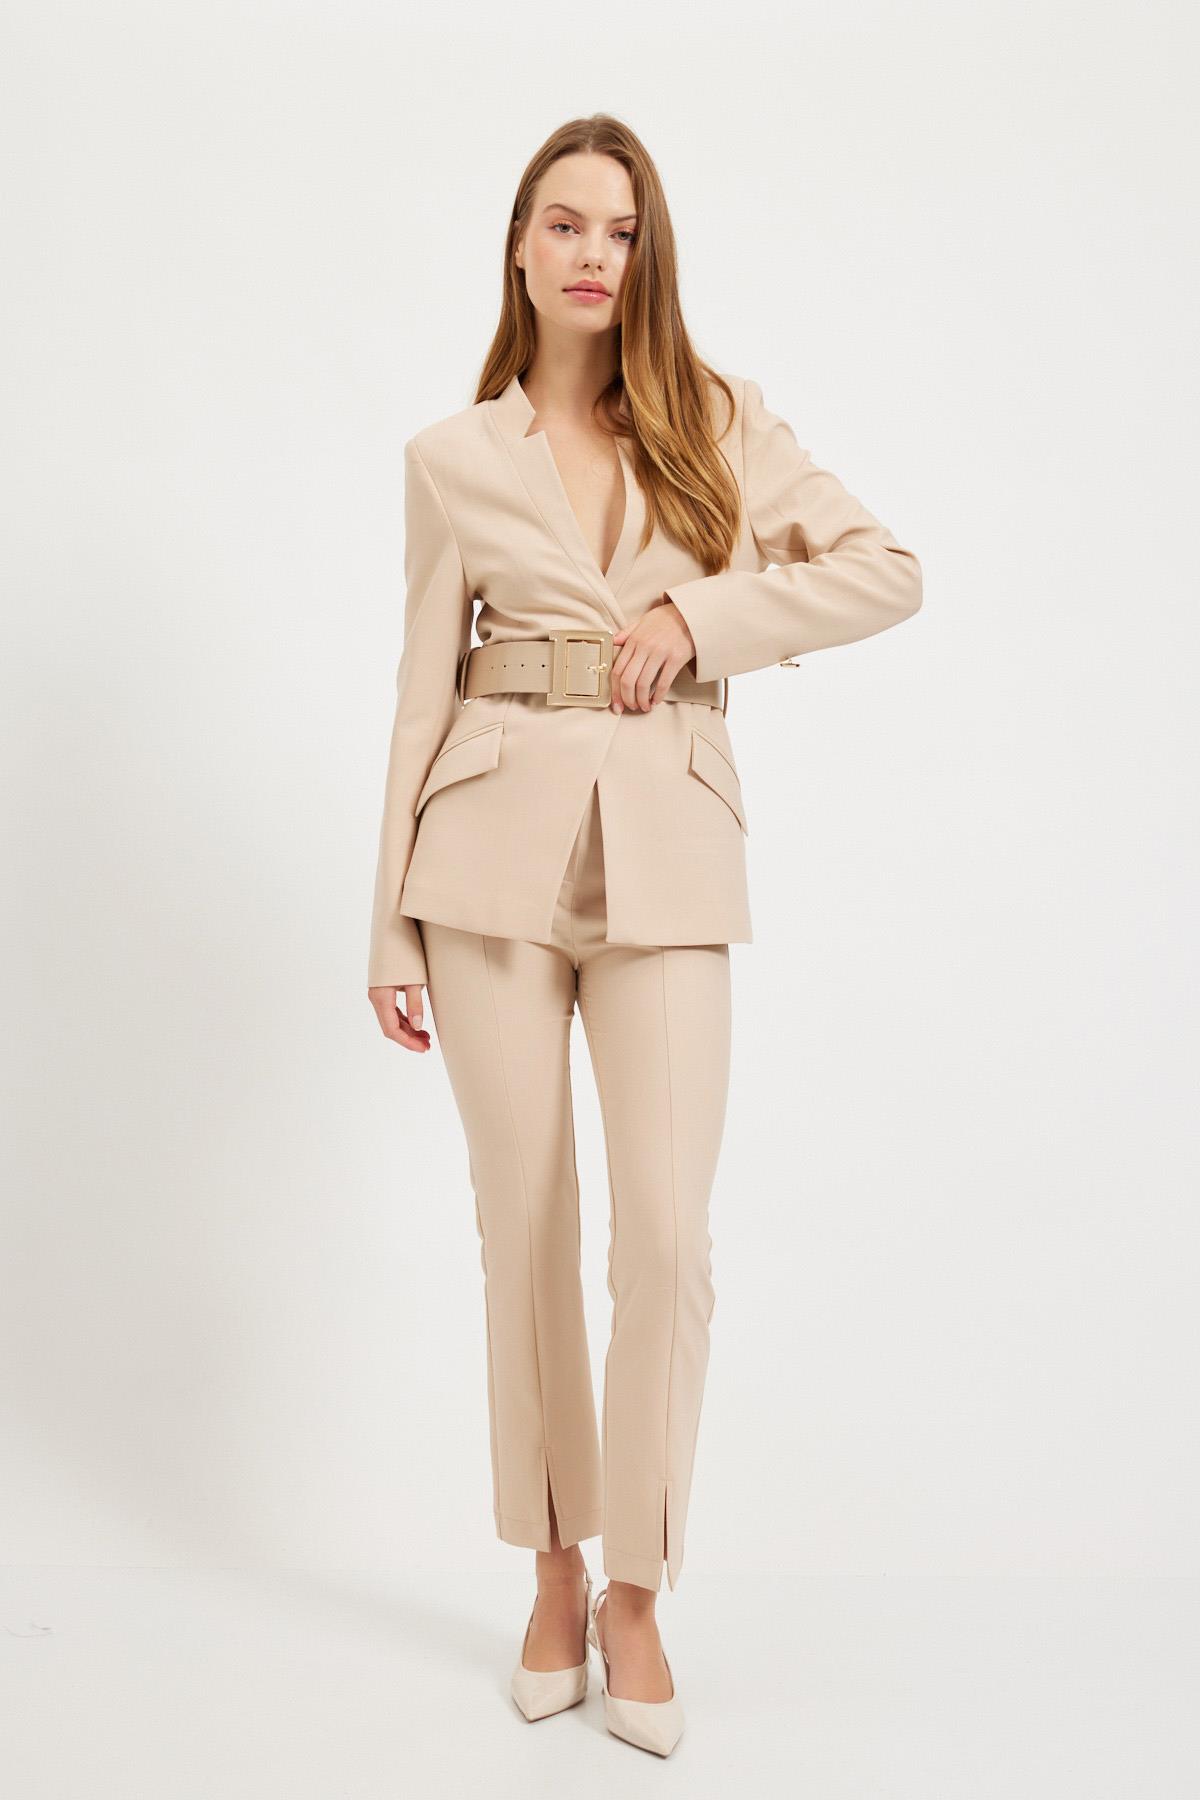 Buy Peter England Elite Beige Slim Fit Three Piece Suits for Mens Online   Tata CLiQ